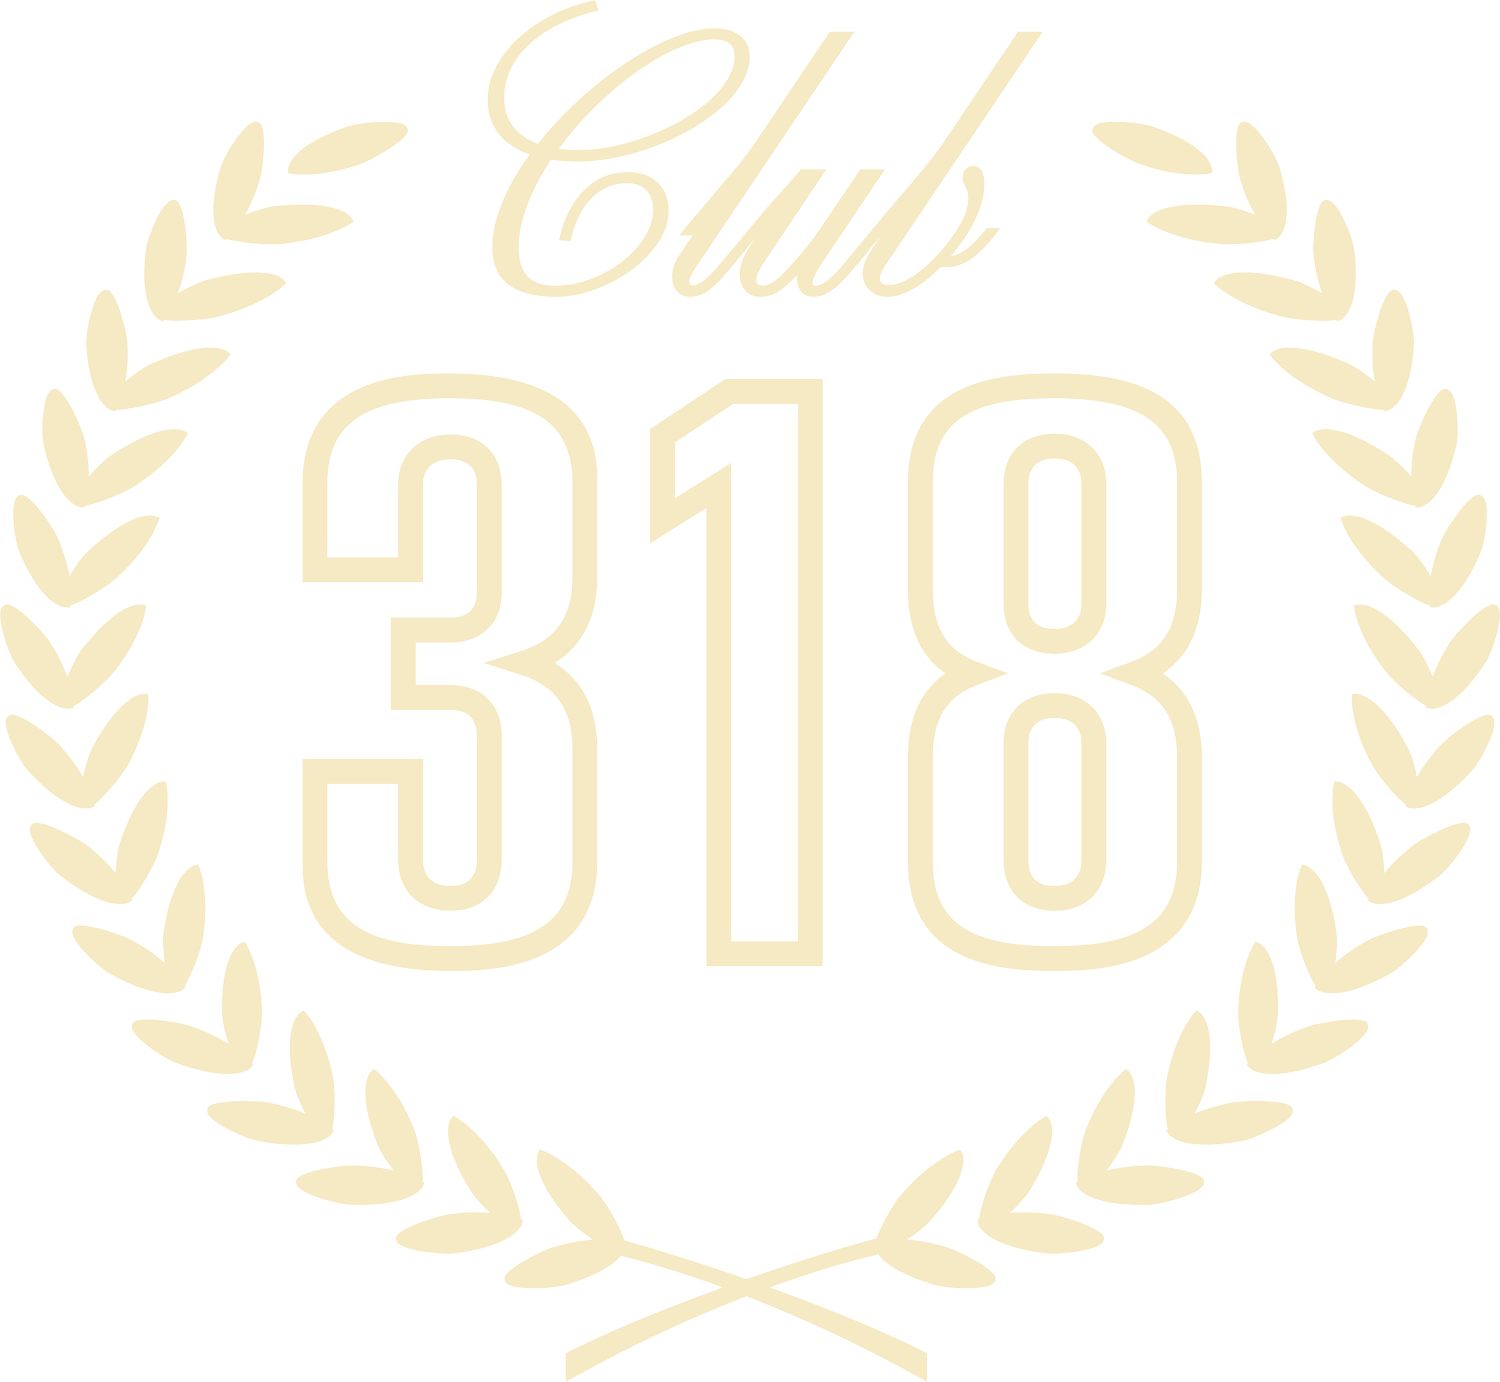 Club 318